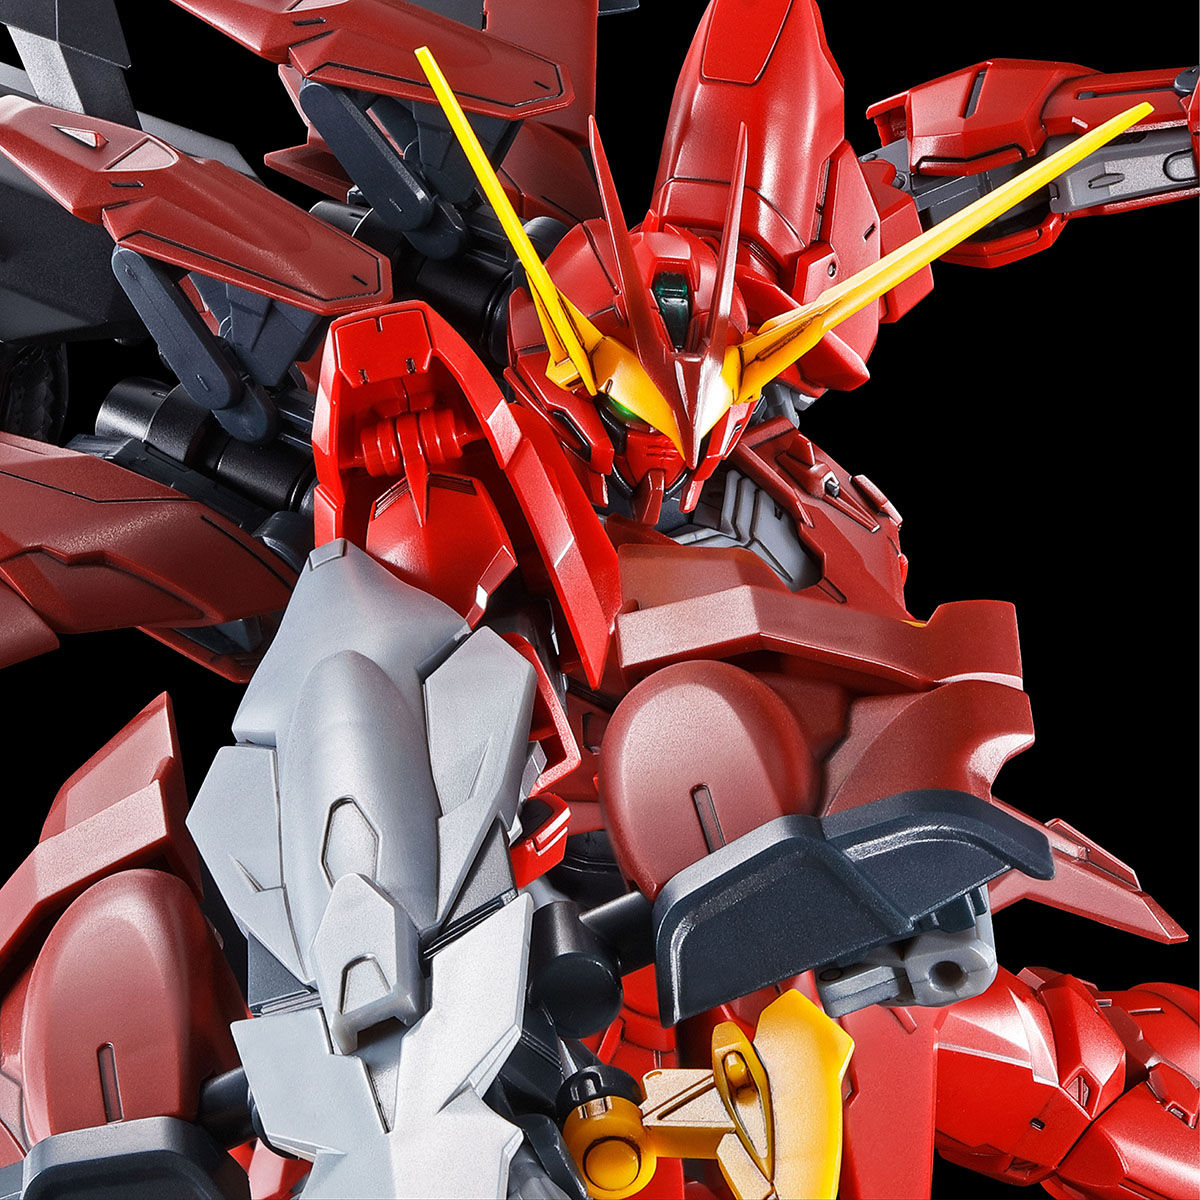 P Bandai Mg 1 100 Testament Gundam Reissue Release Info Gundam Kits Collection News And Reviews